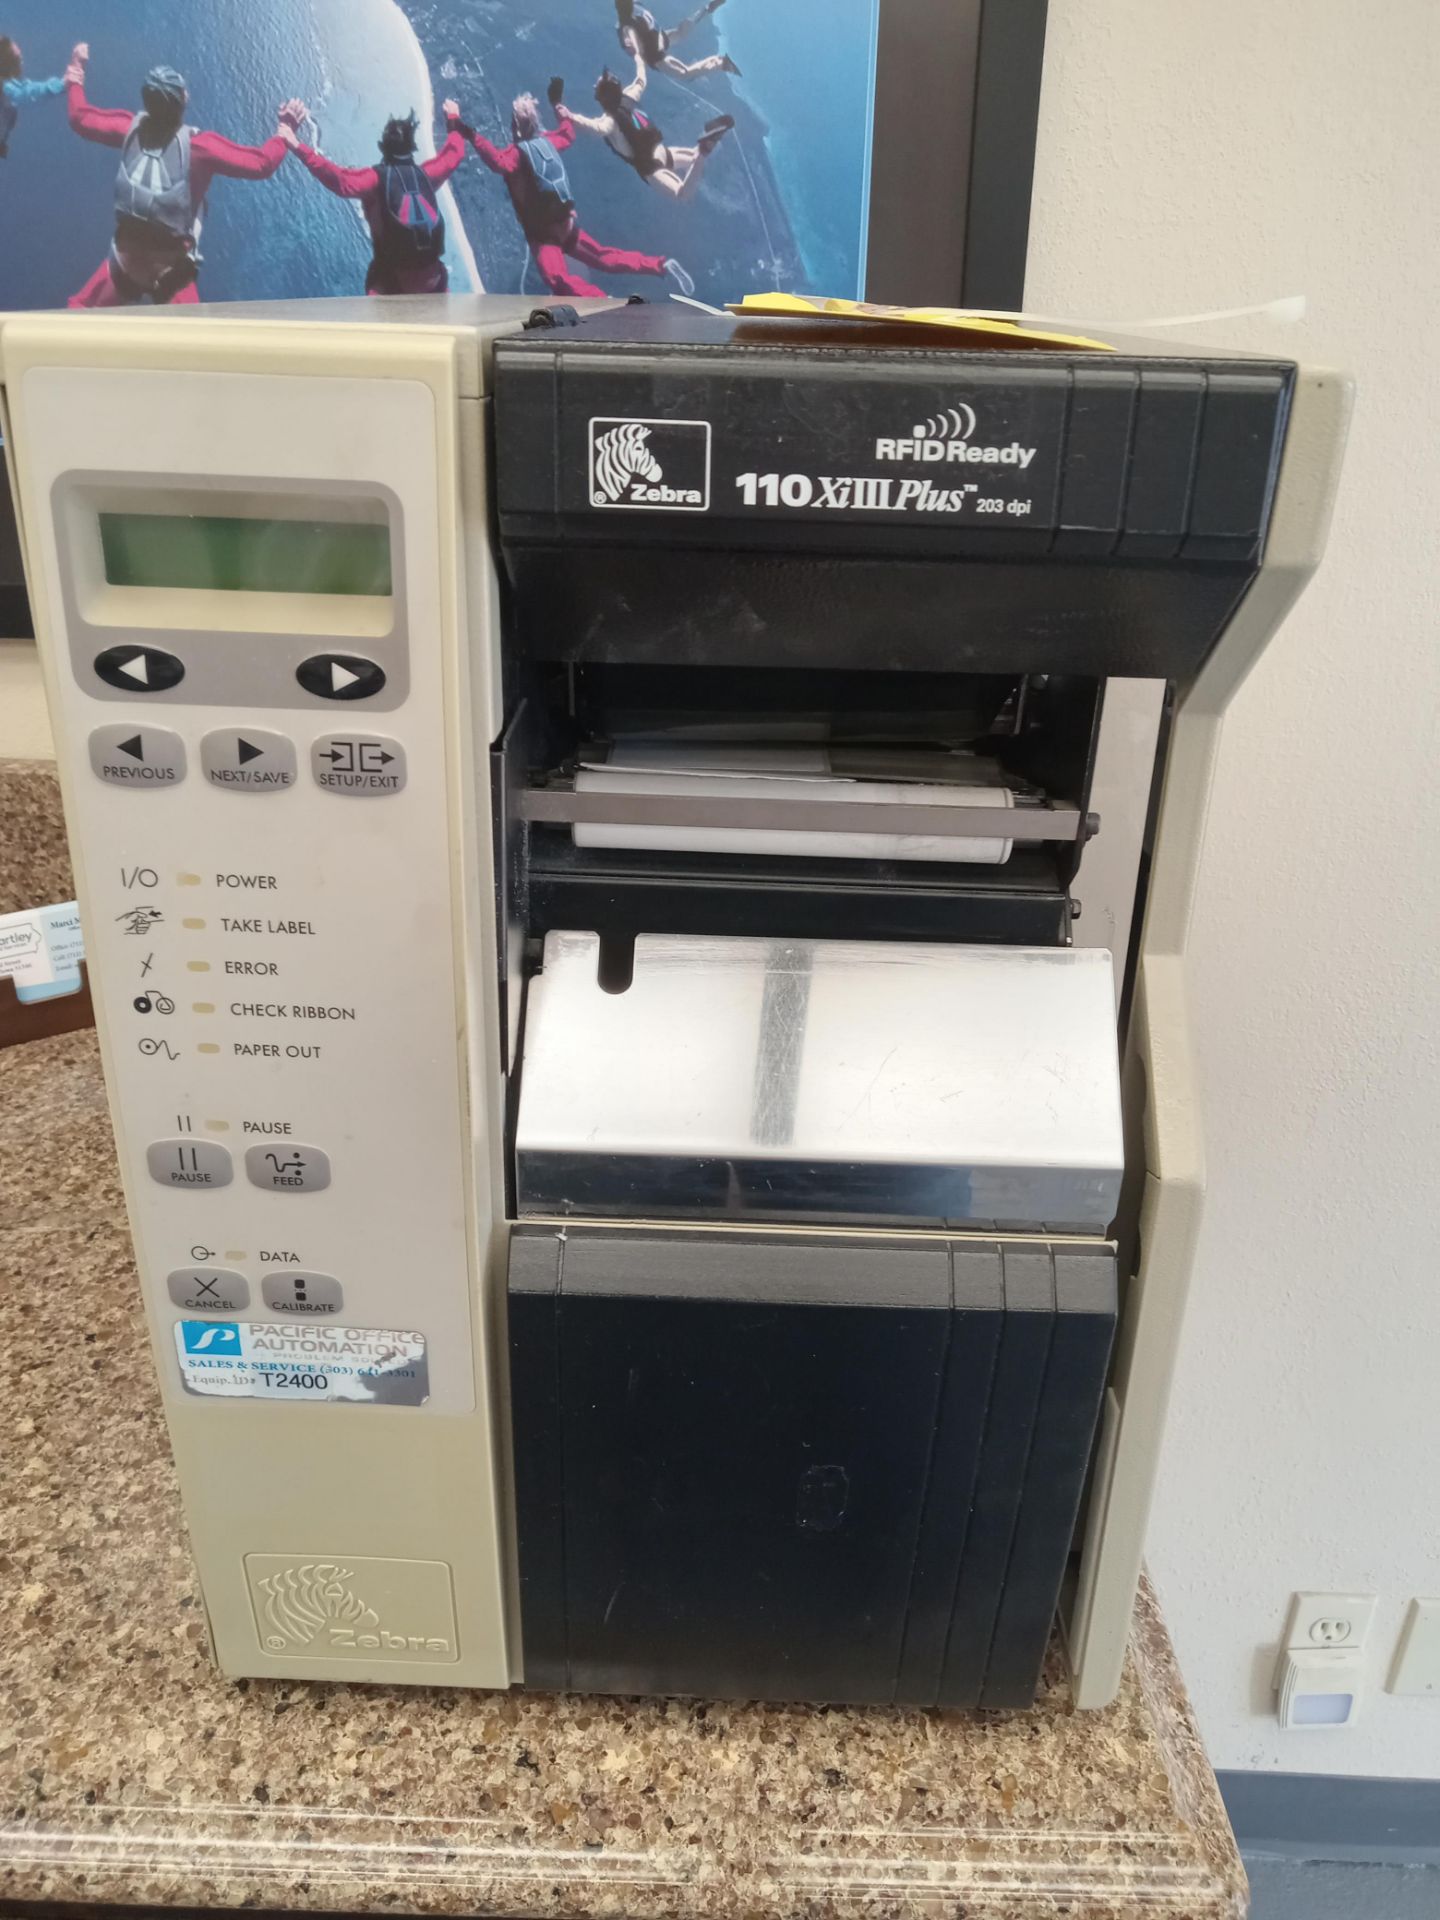 Lot Location: Hartley IA - Zebra Printer, Model #110XIII, S/N #91c06500351